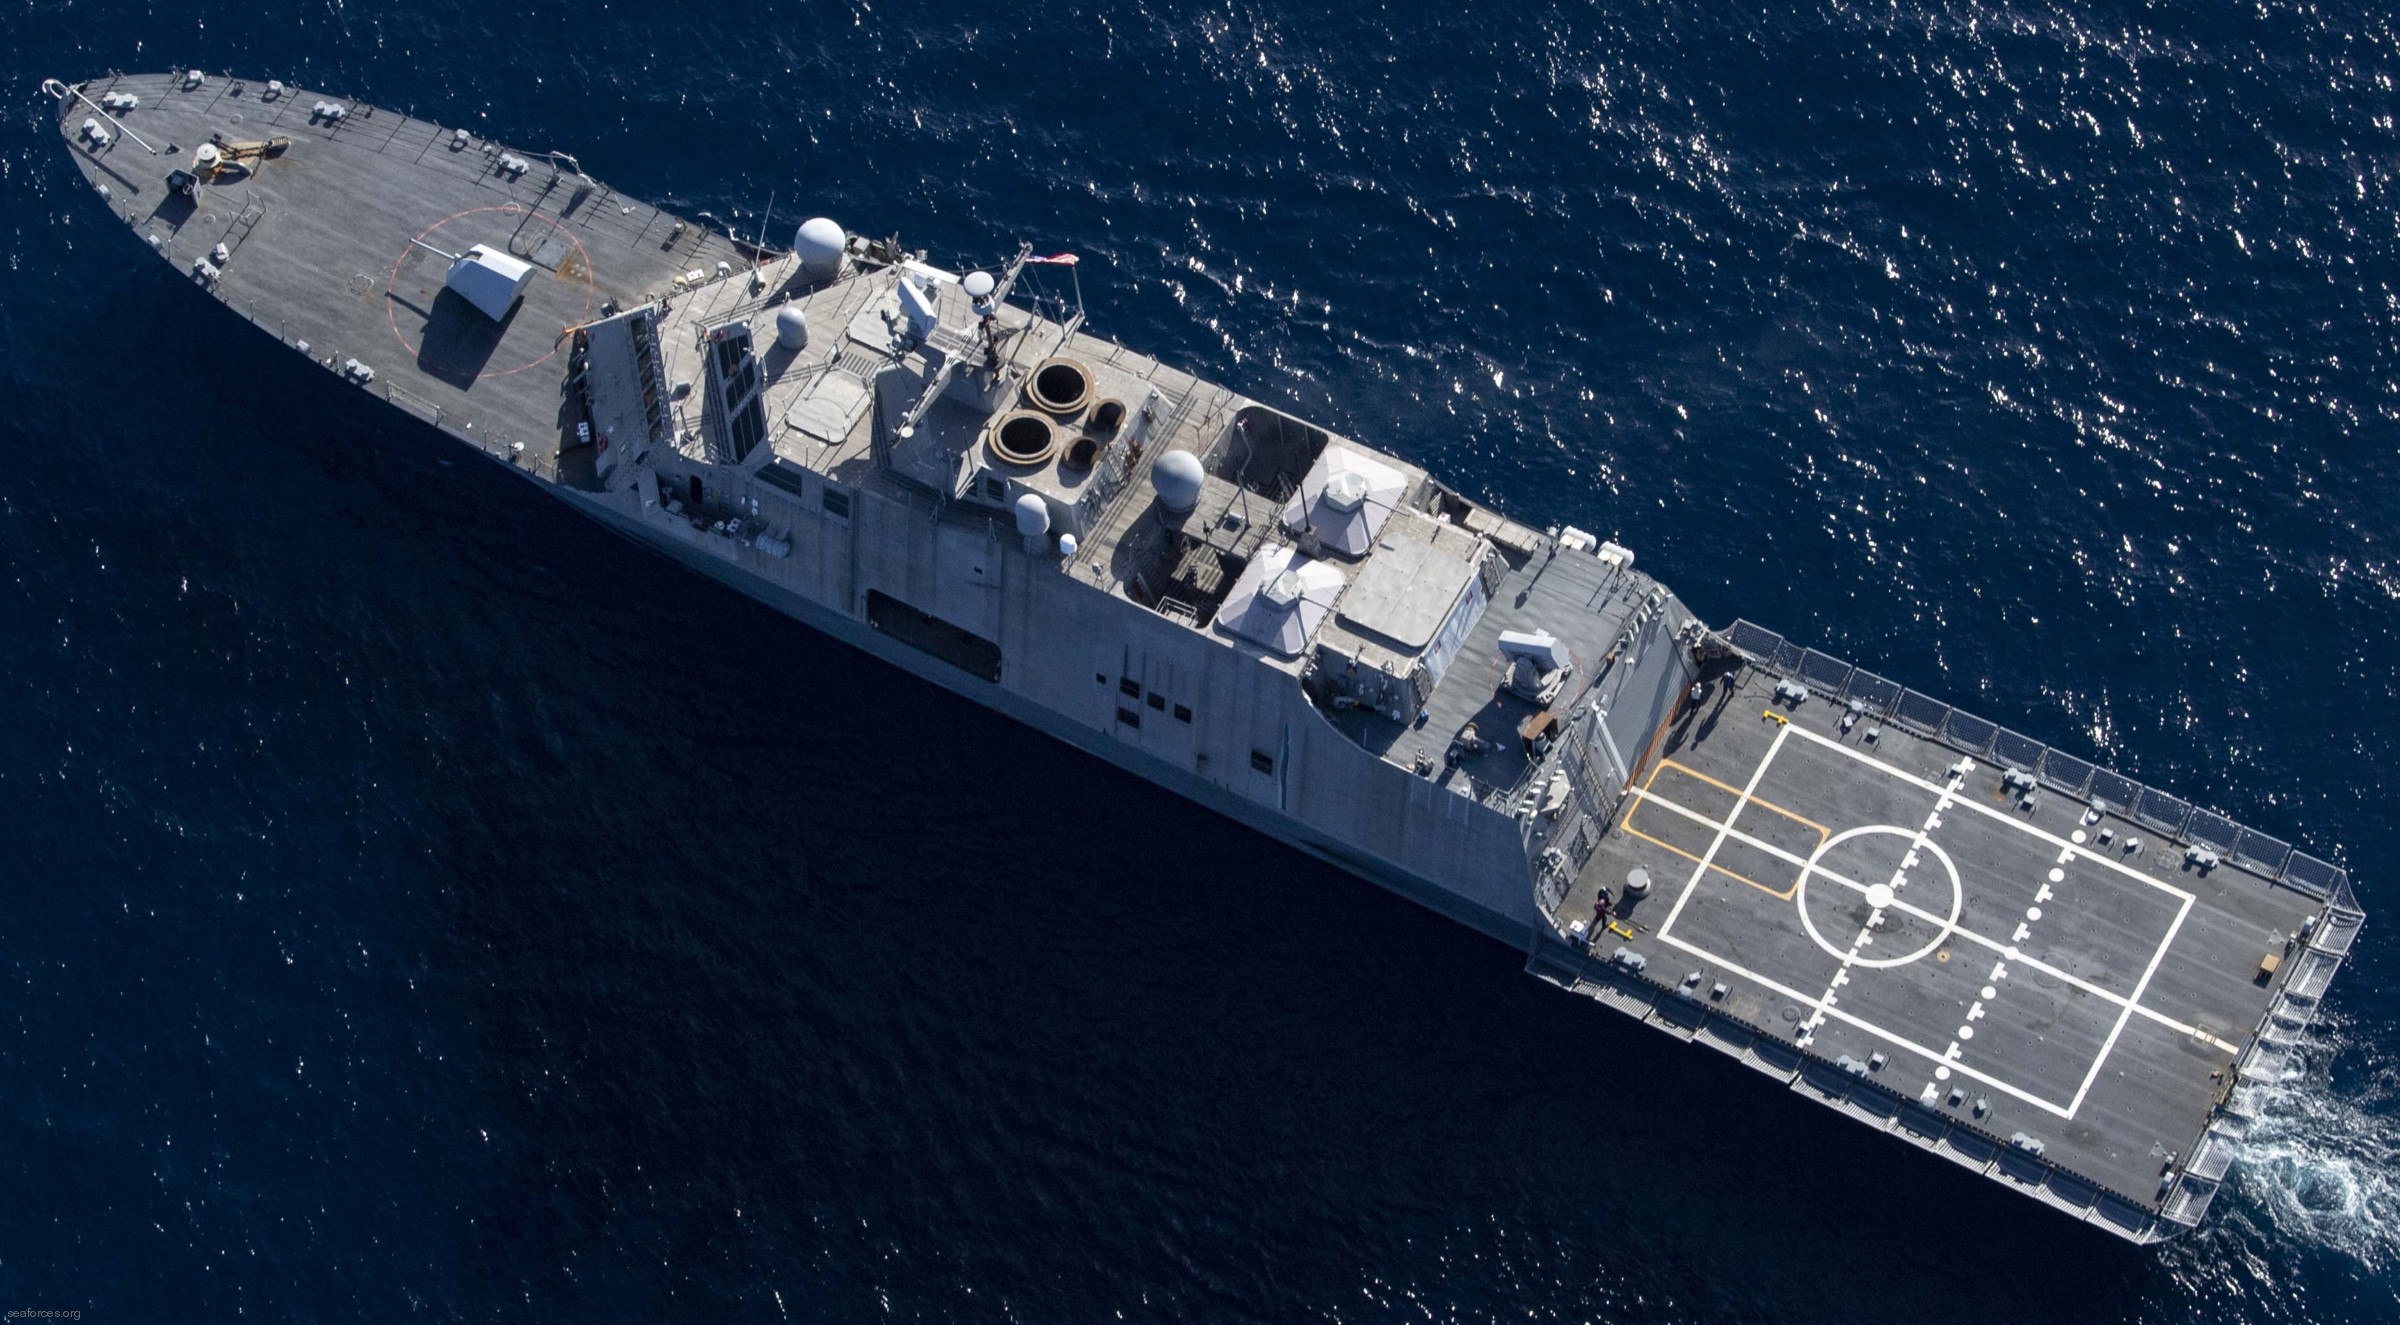 lcs-5 uss milwaukee freedom class littoral combat ship us navy 18x fincantieri marinette marine lockheed martin